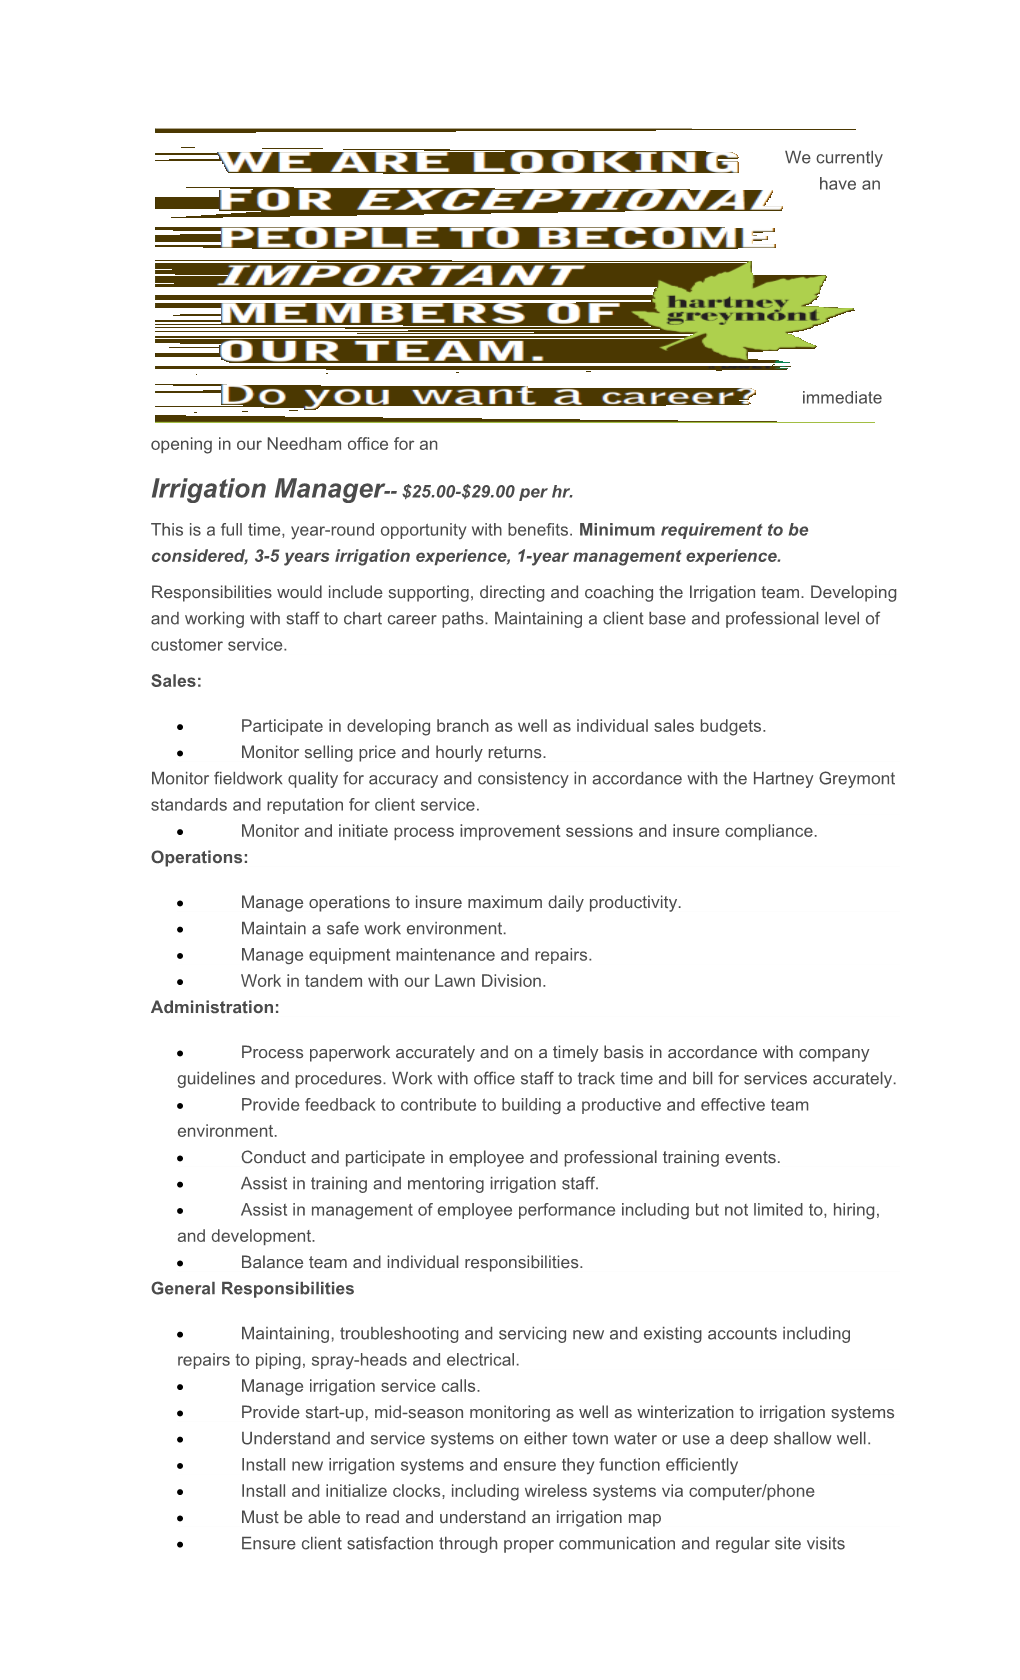 Irrigation Manager $25.00-$29.00 Per Hr